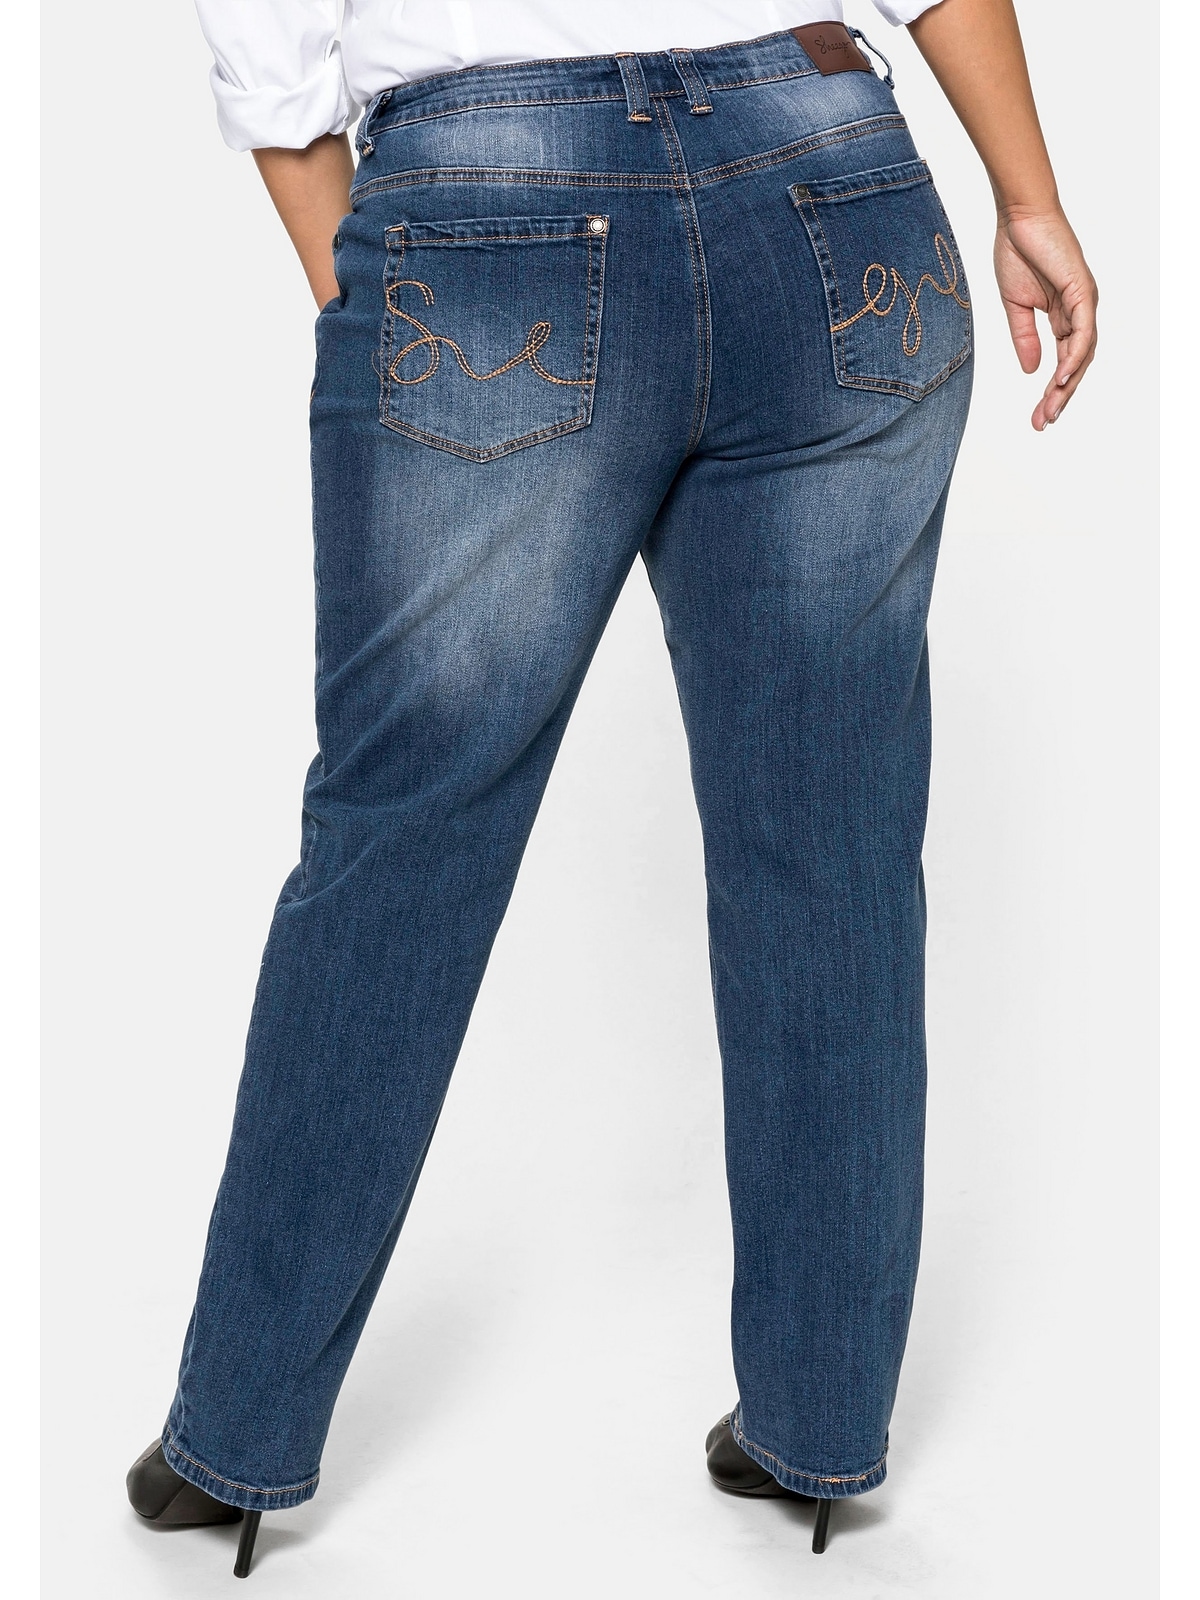 »Große Größen«, Stretch-Jeans shoppen Sheego Bauch-weg-Effekt